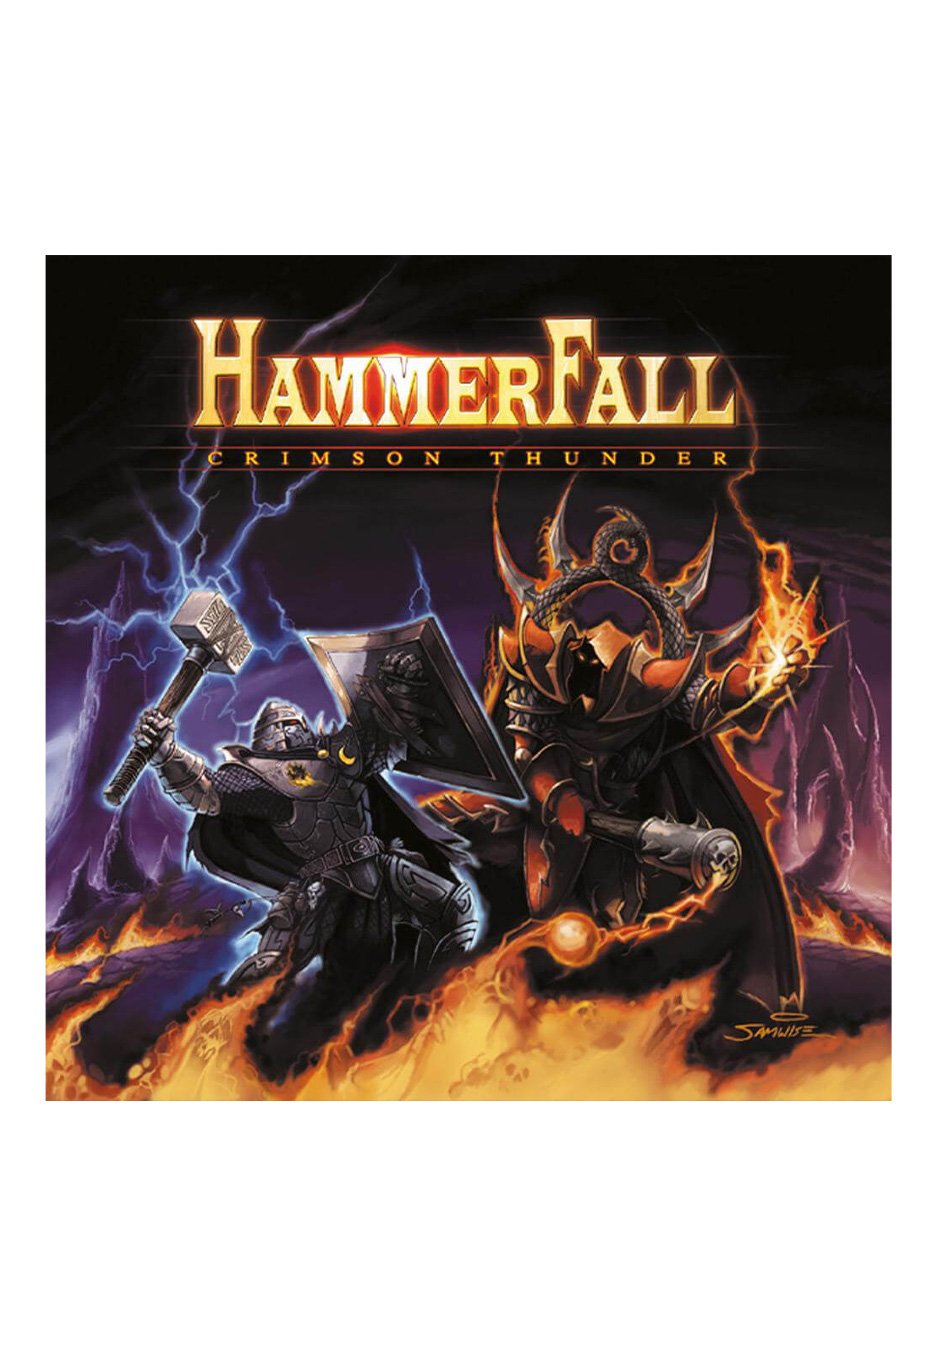 Hammerfall - Crimson Thunder: 20 Year Anniversary (Limited) - 3 CD Boxset